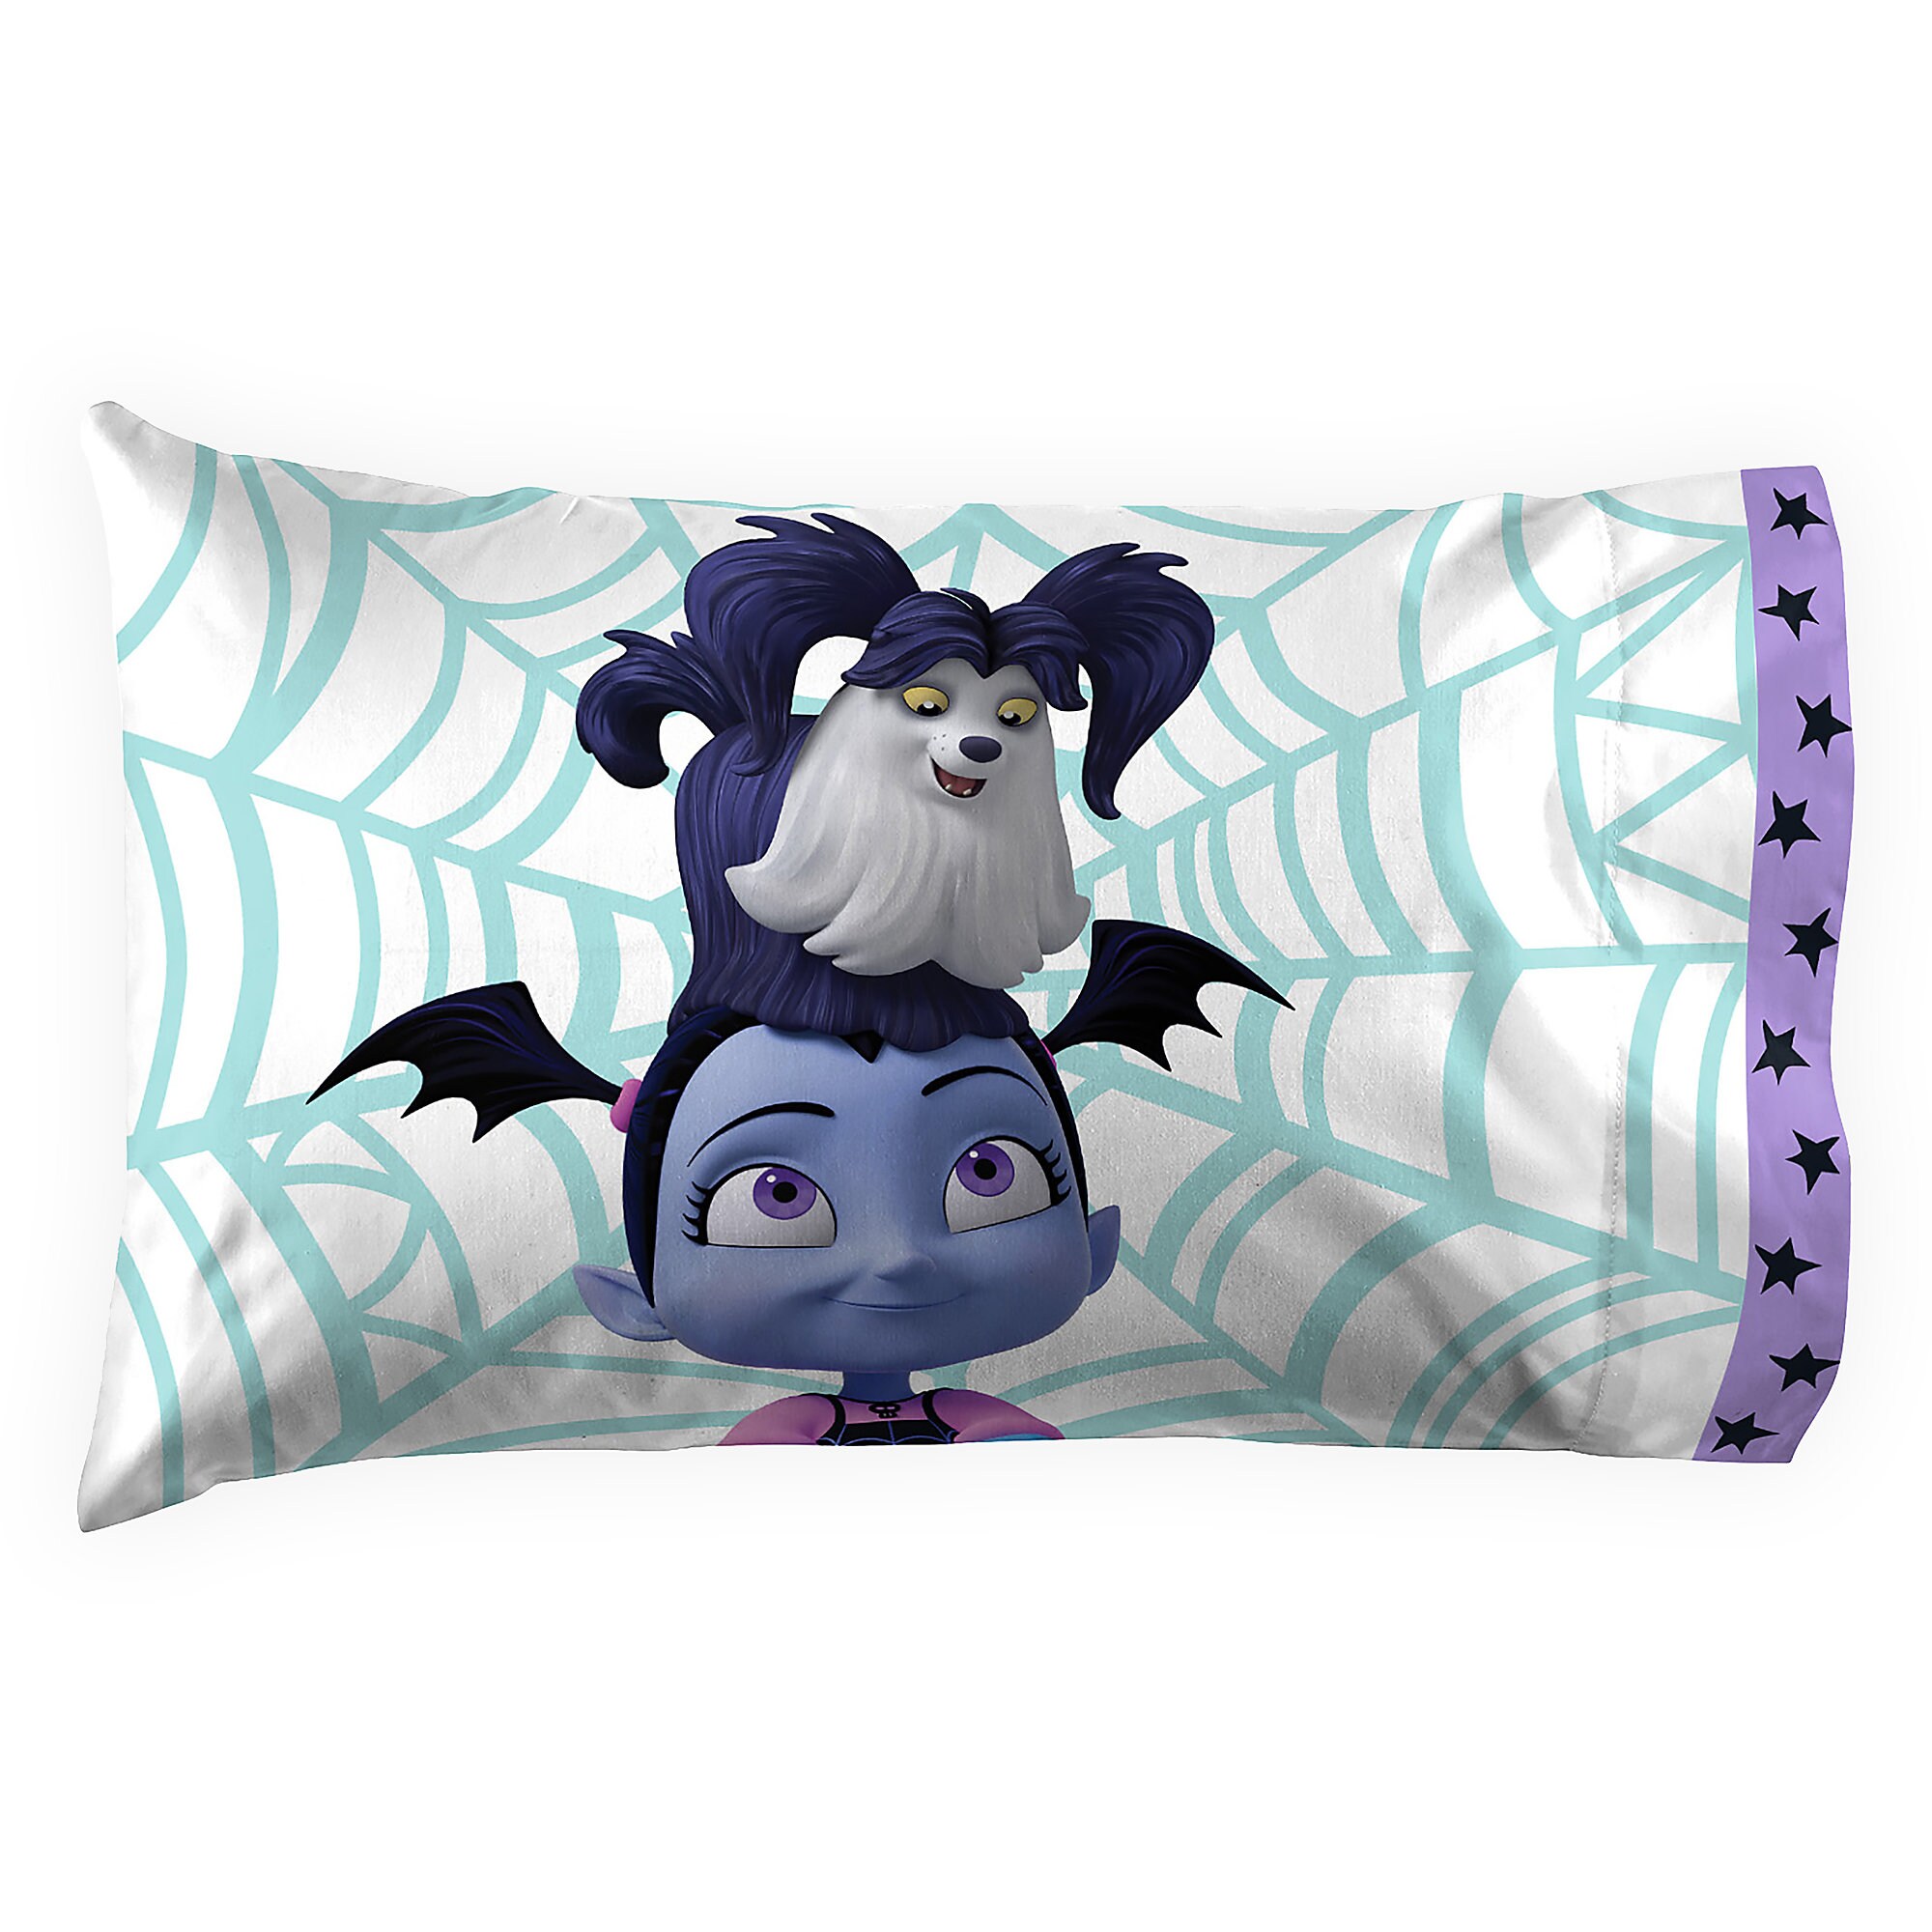 Vampirina Reversible Comforter and Sheet Set - Twin